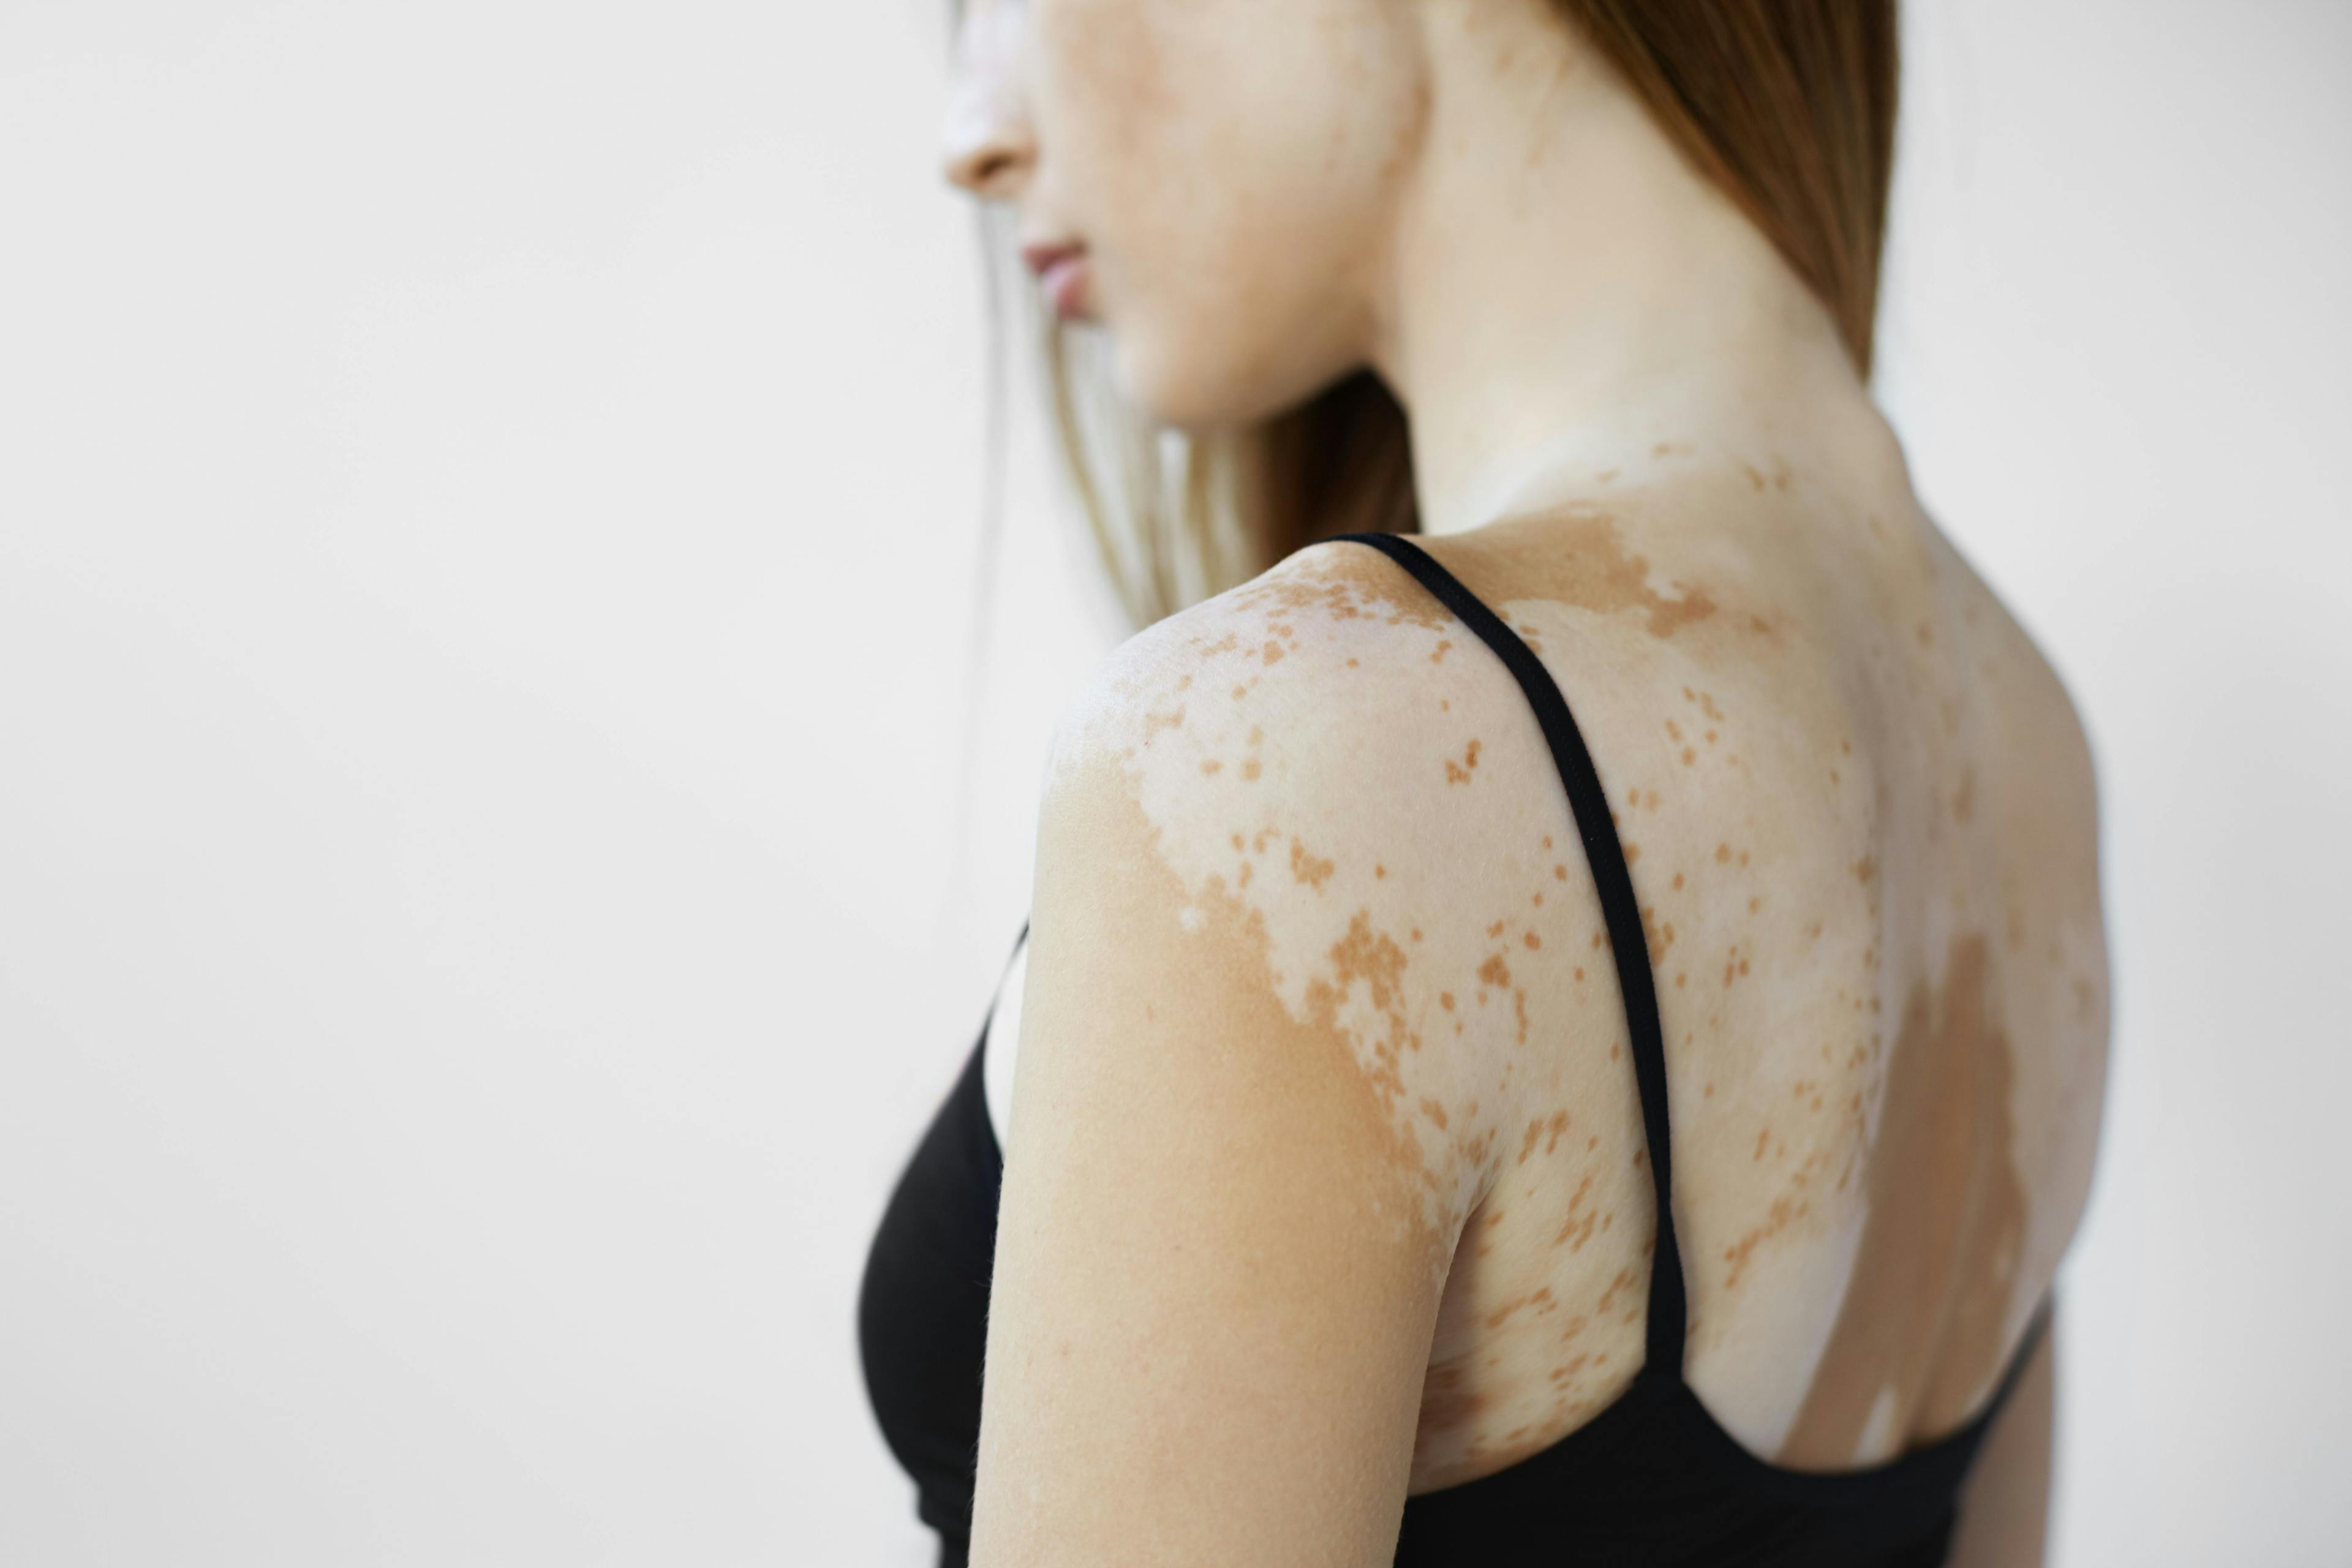 Investigators Develop New Vitiligo Impact Treatment Score